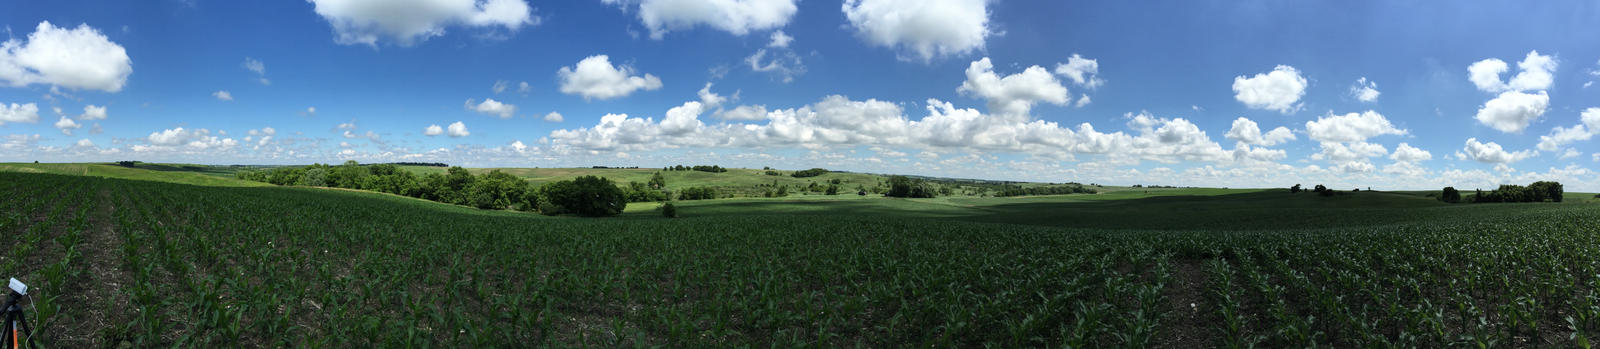 Corn Field and Blue Skies